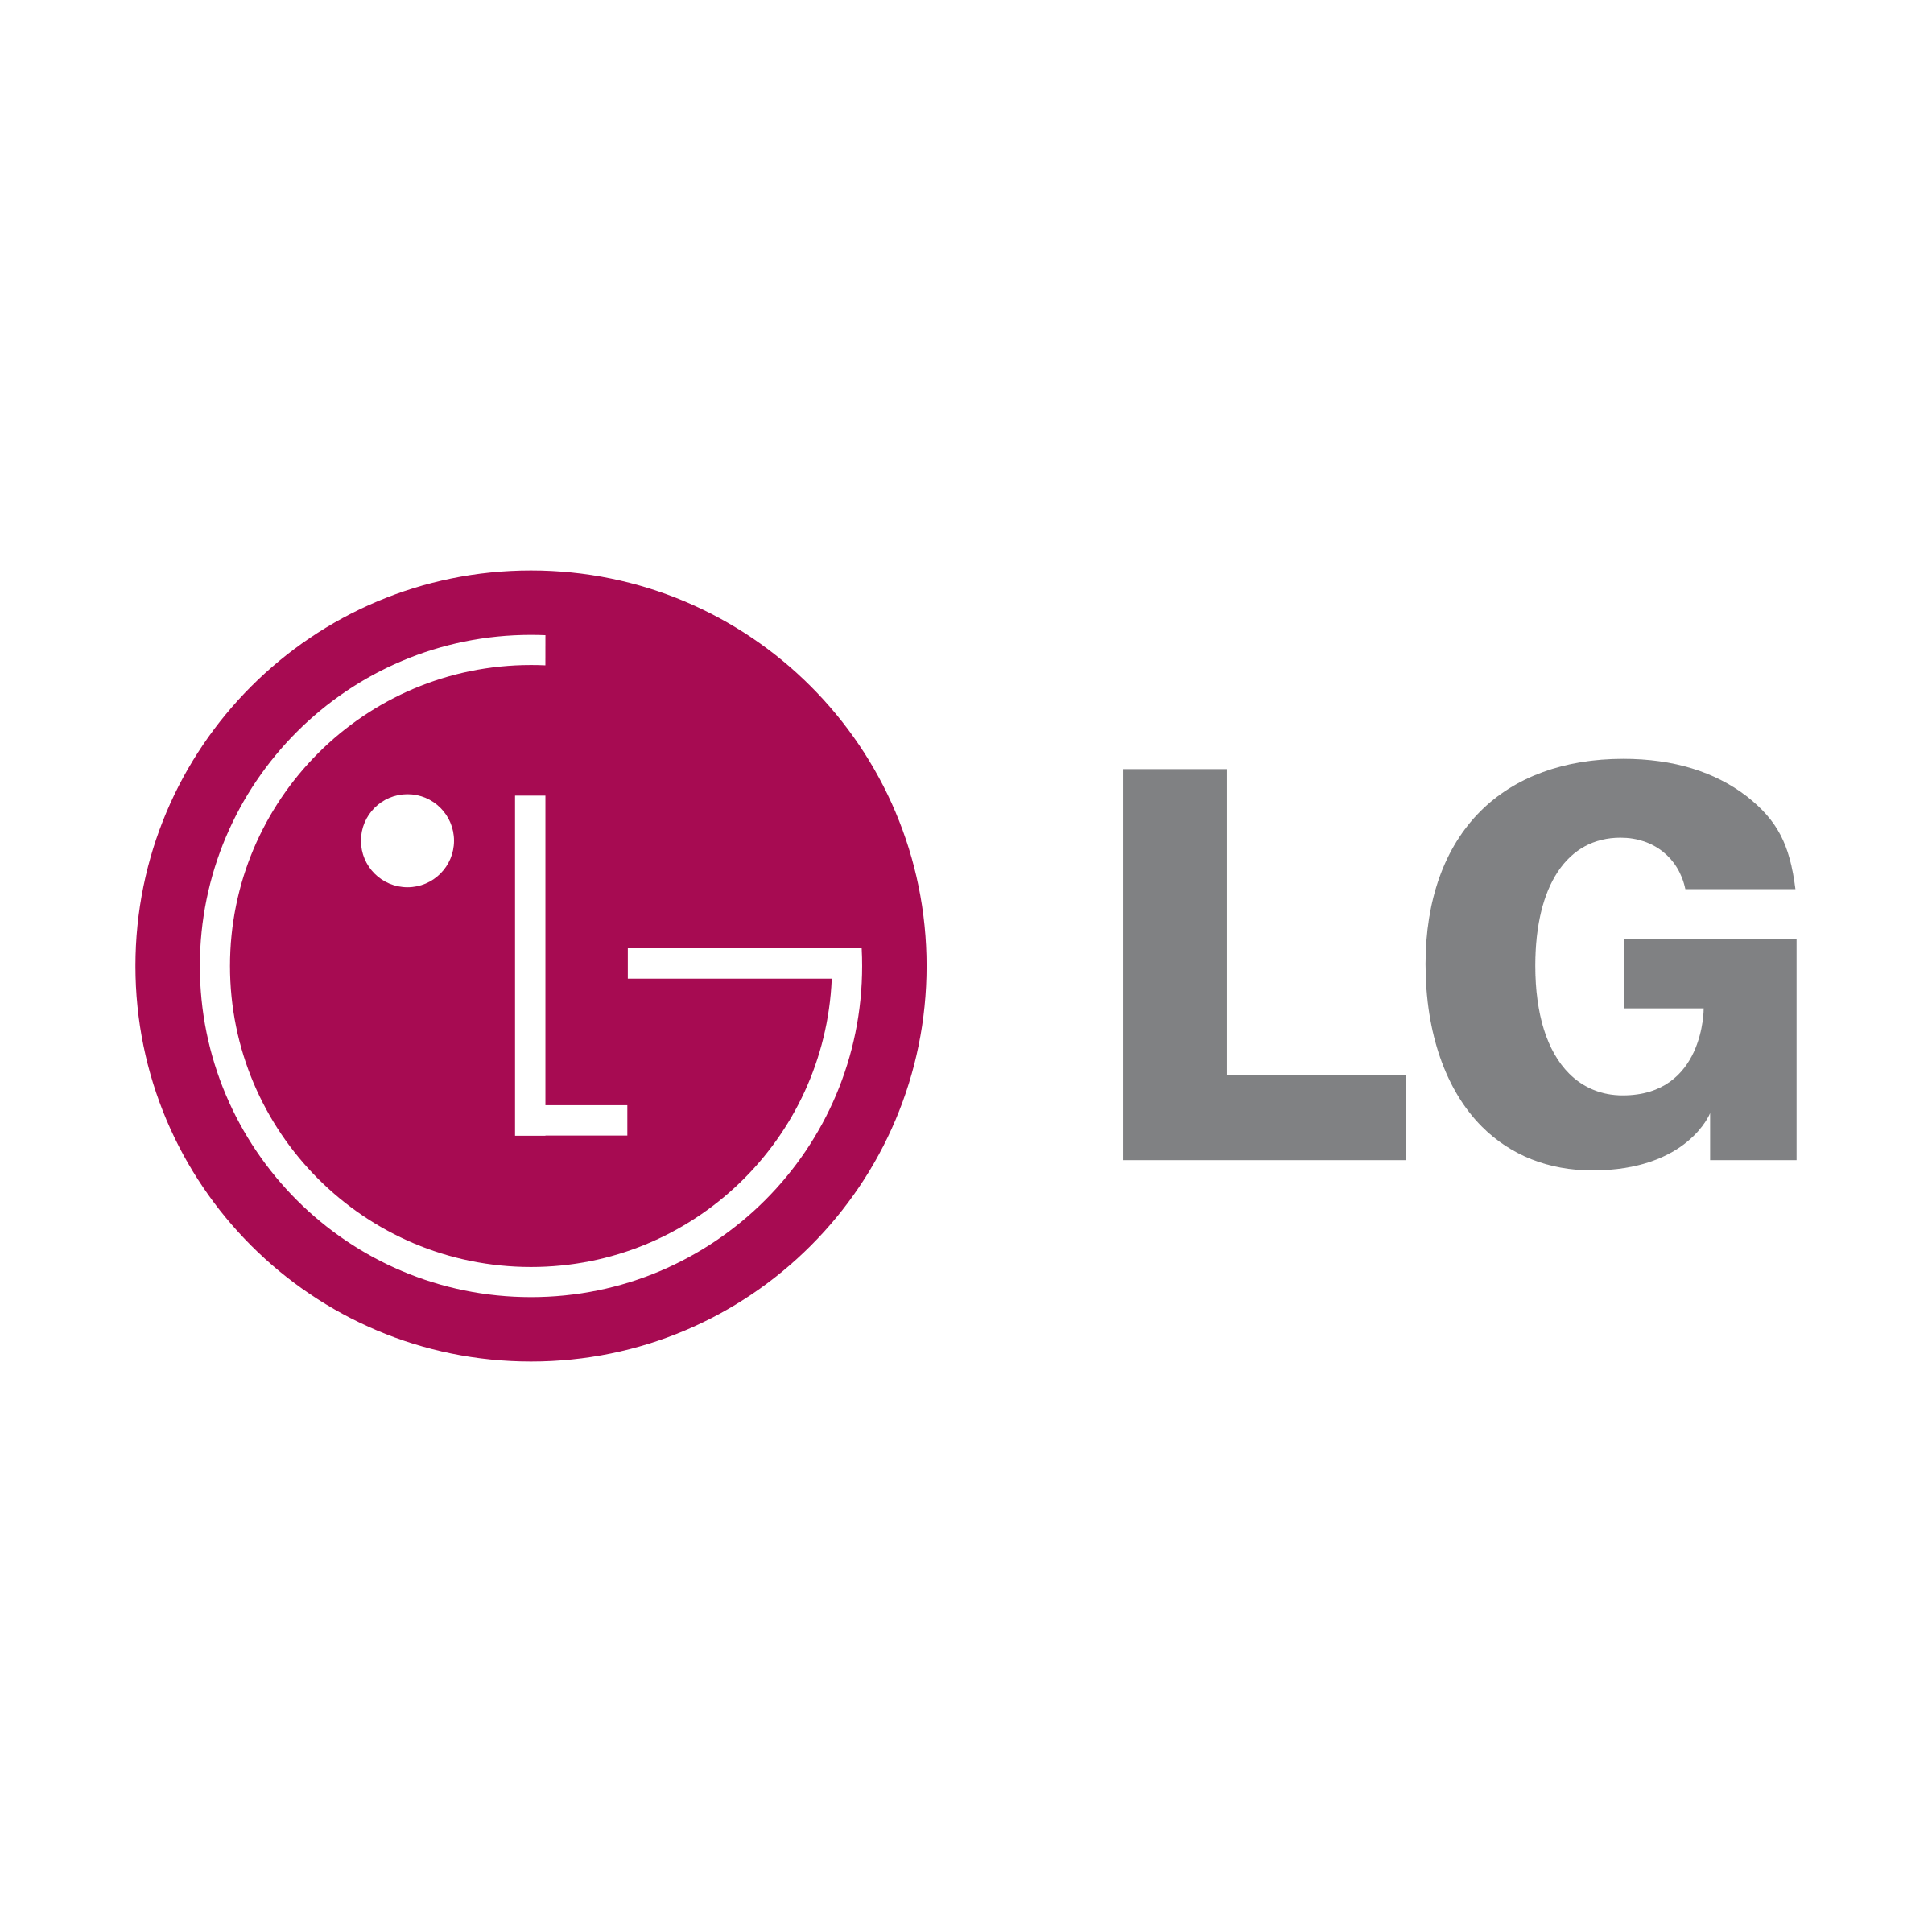 LG Electronics Logo - LG Electronics Logo PNG Transparent & SVG Vector - Freebie Supply